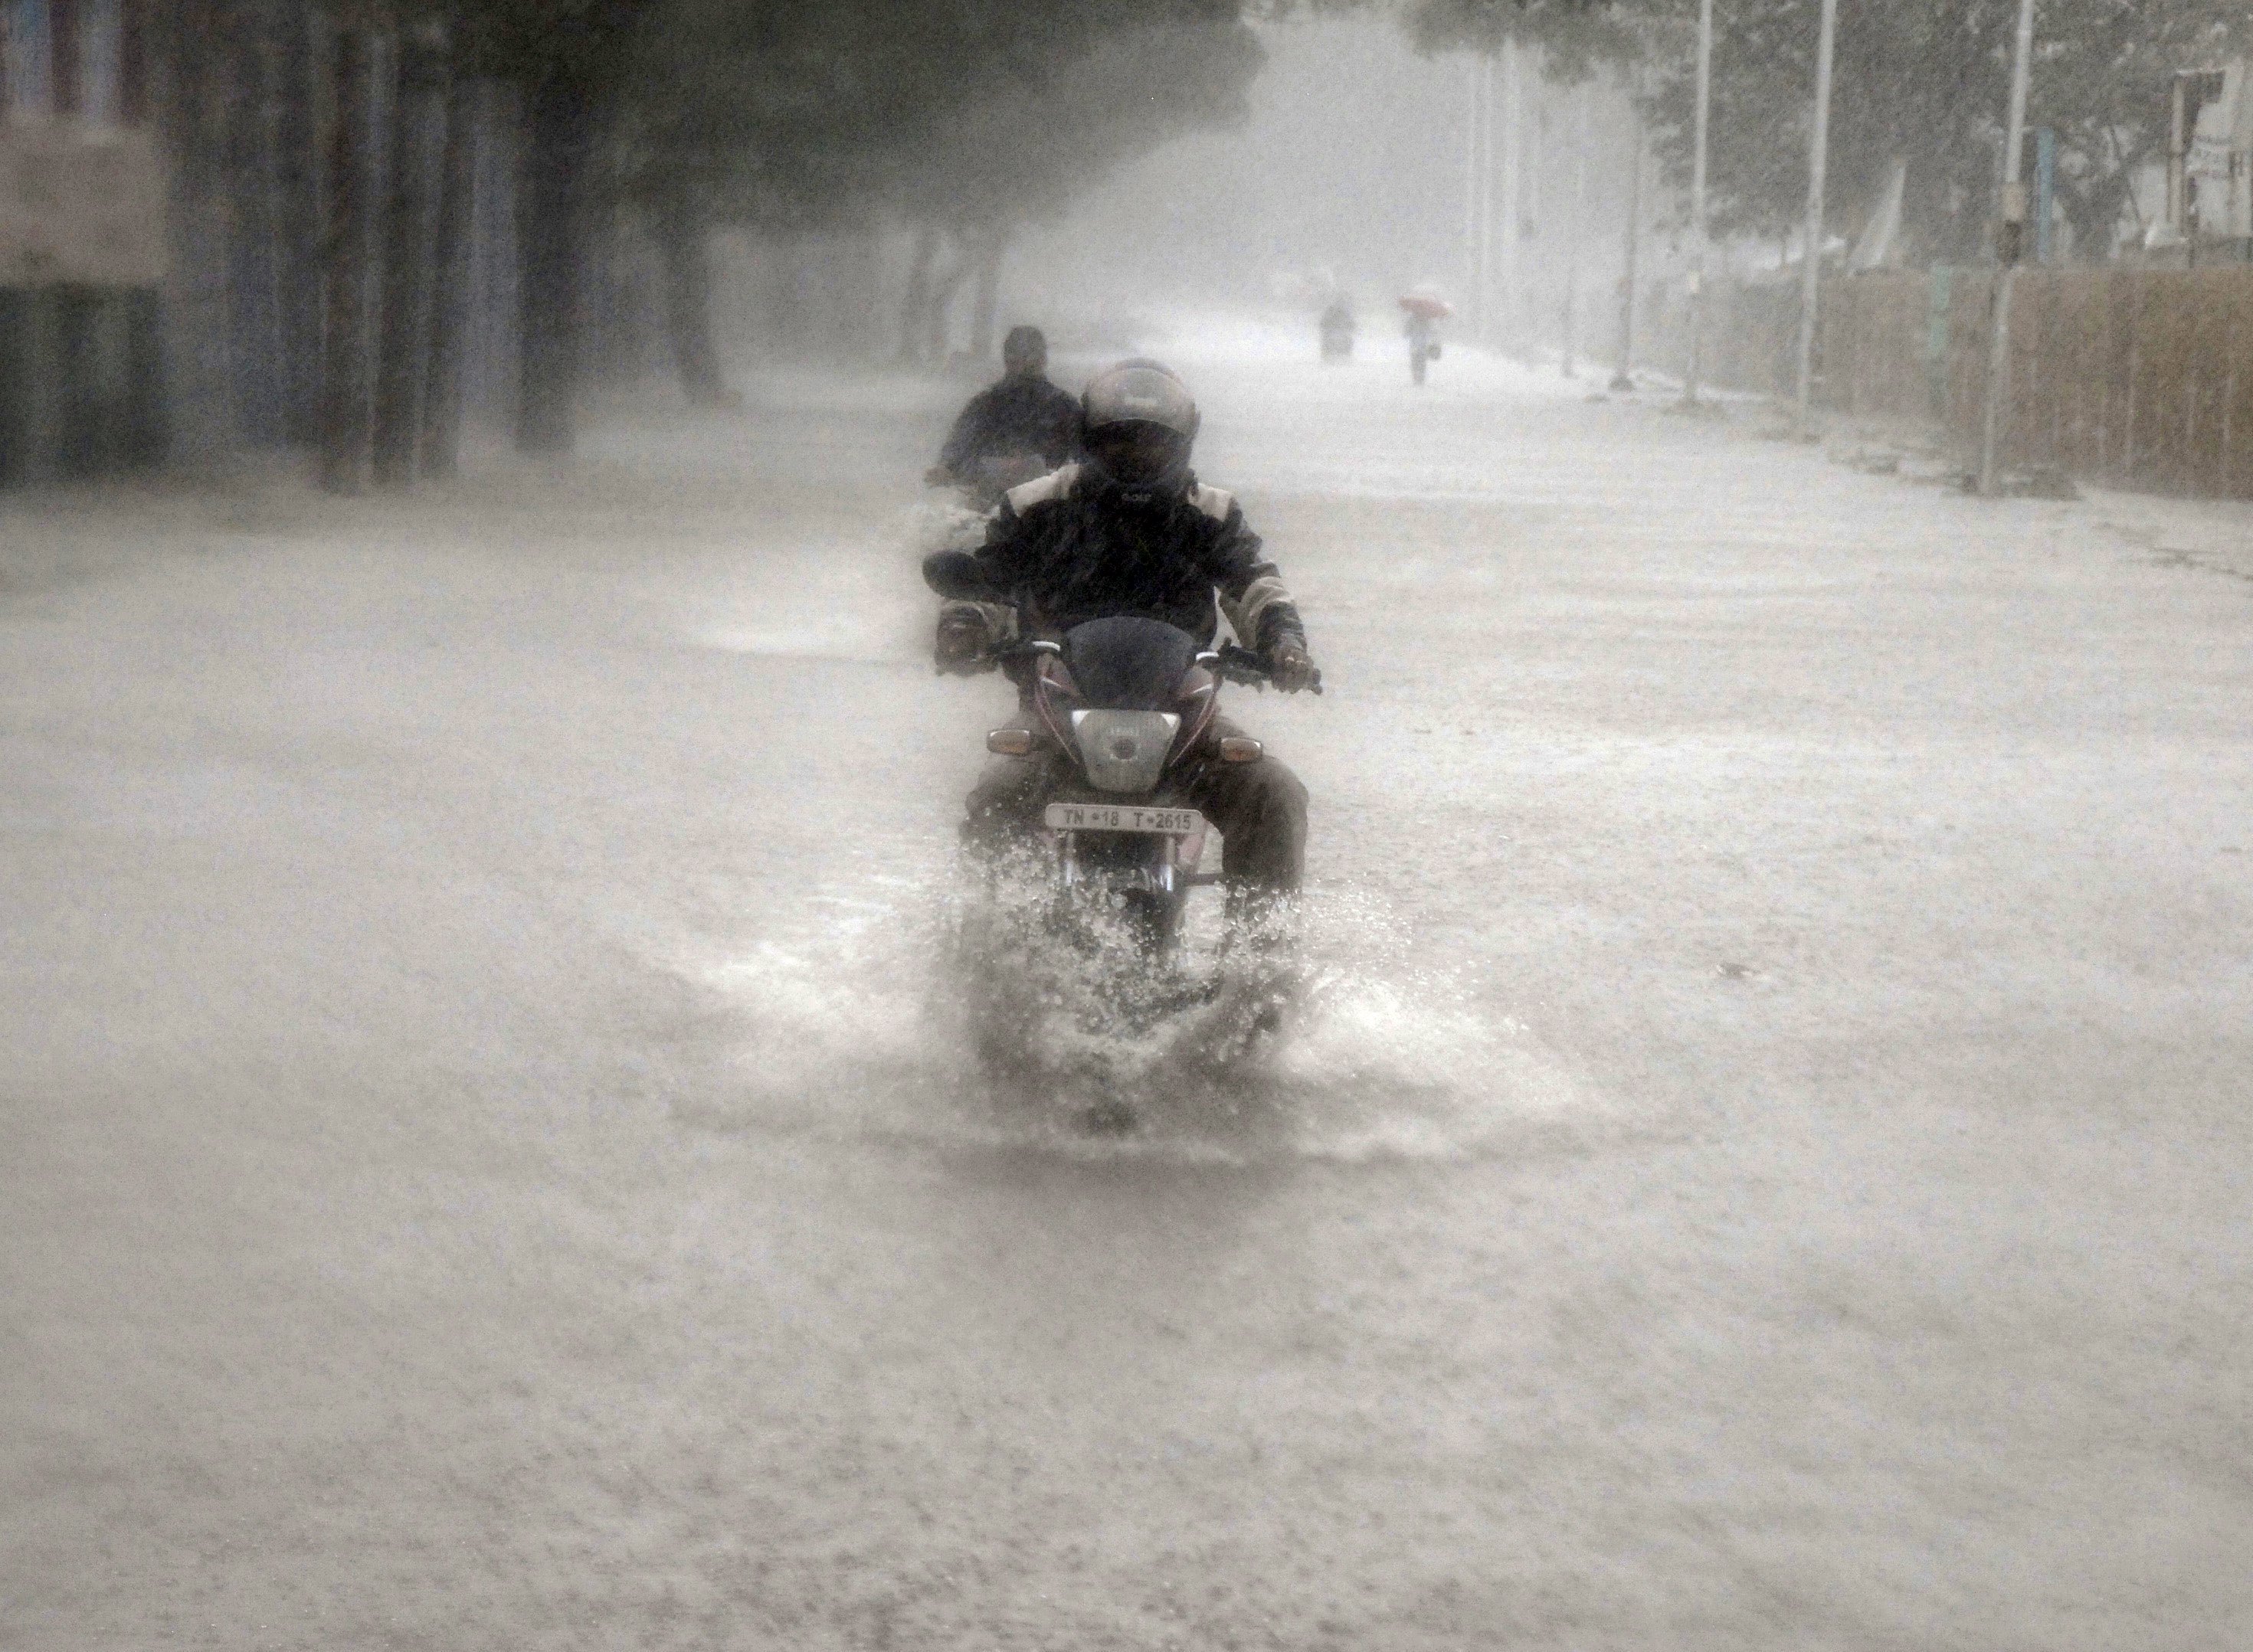 A man rides his motorbike through a flooded road during heavy rain in Chennai, India, November 9, 2015. Photo: Reuters